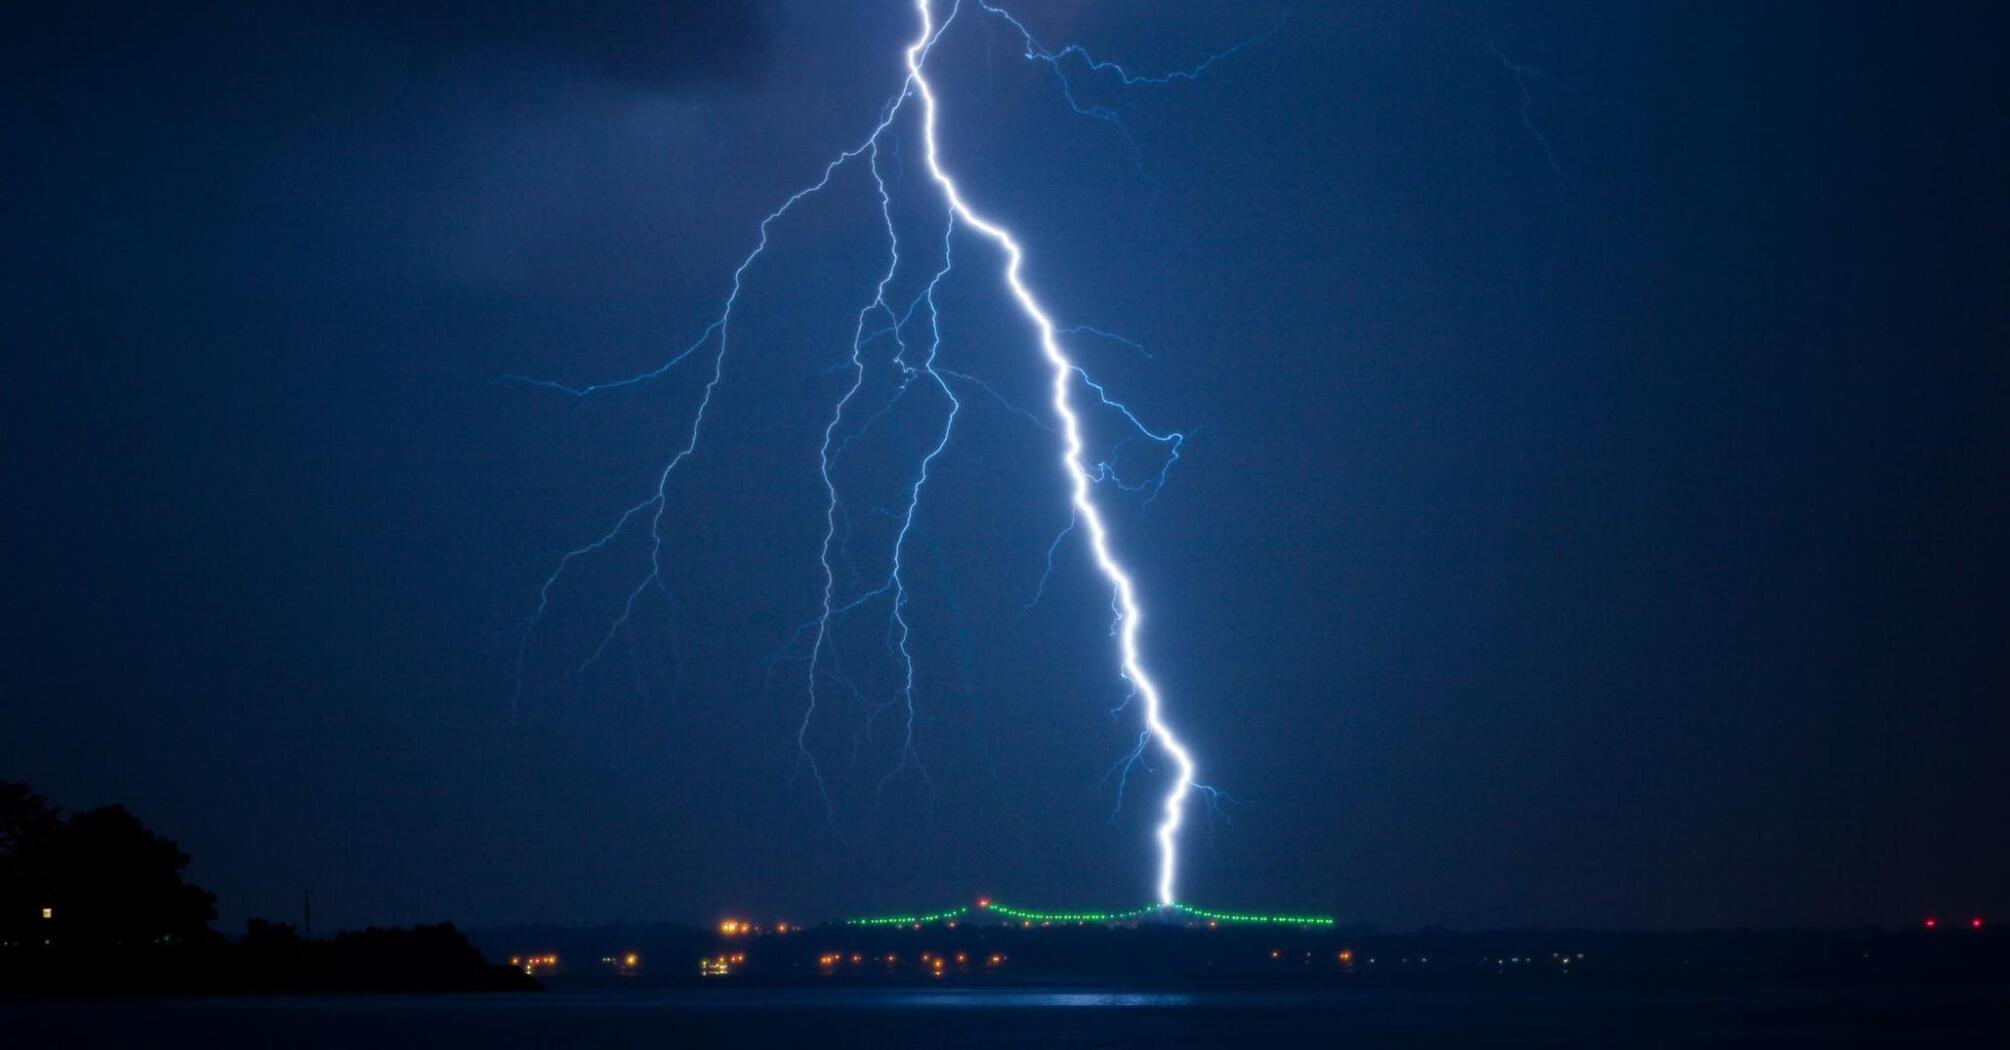 Lightning struck on the sea shore